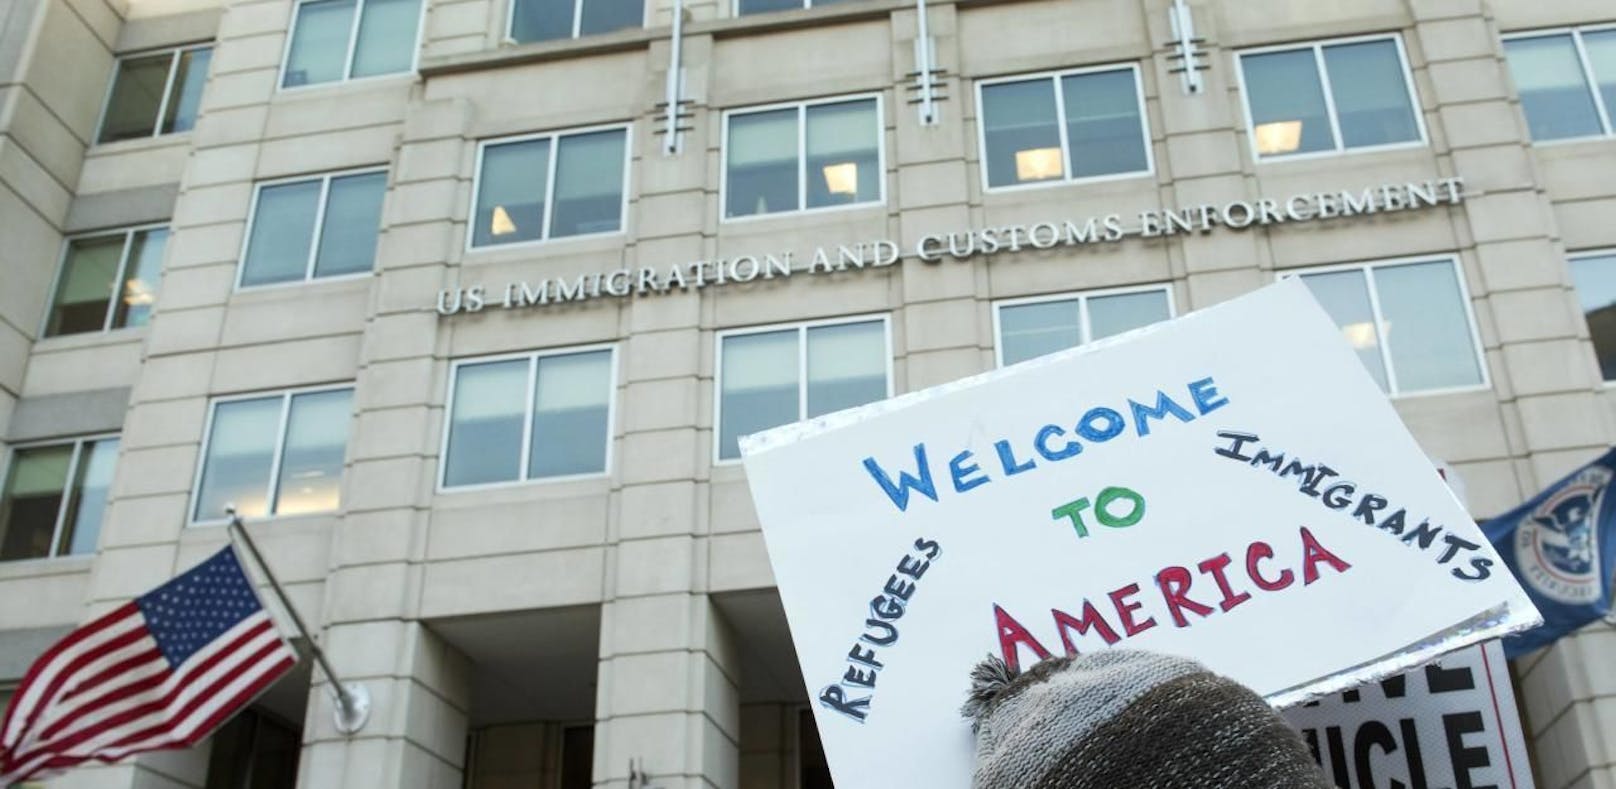 Die US Immigration, Customs and Enforcement Agency steht in der Kritik.